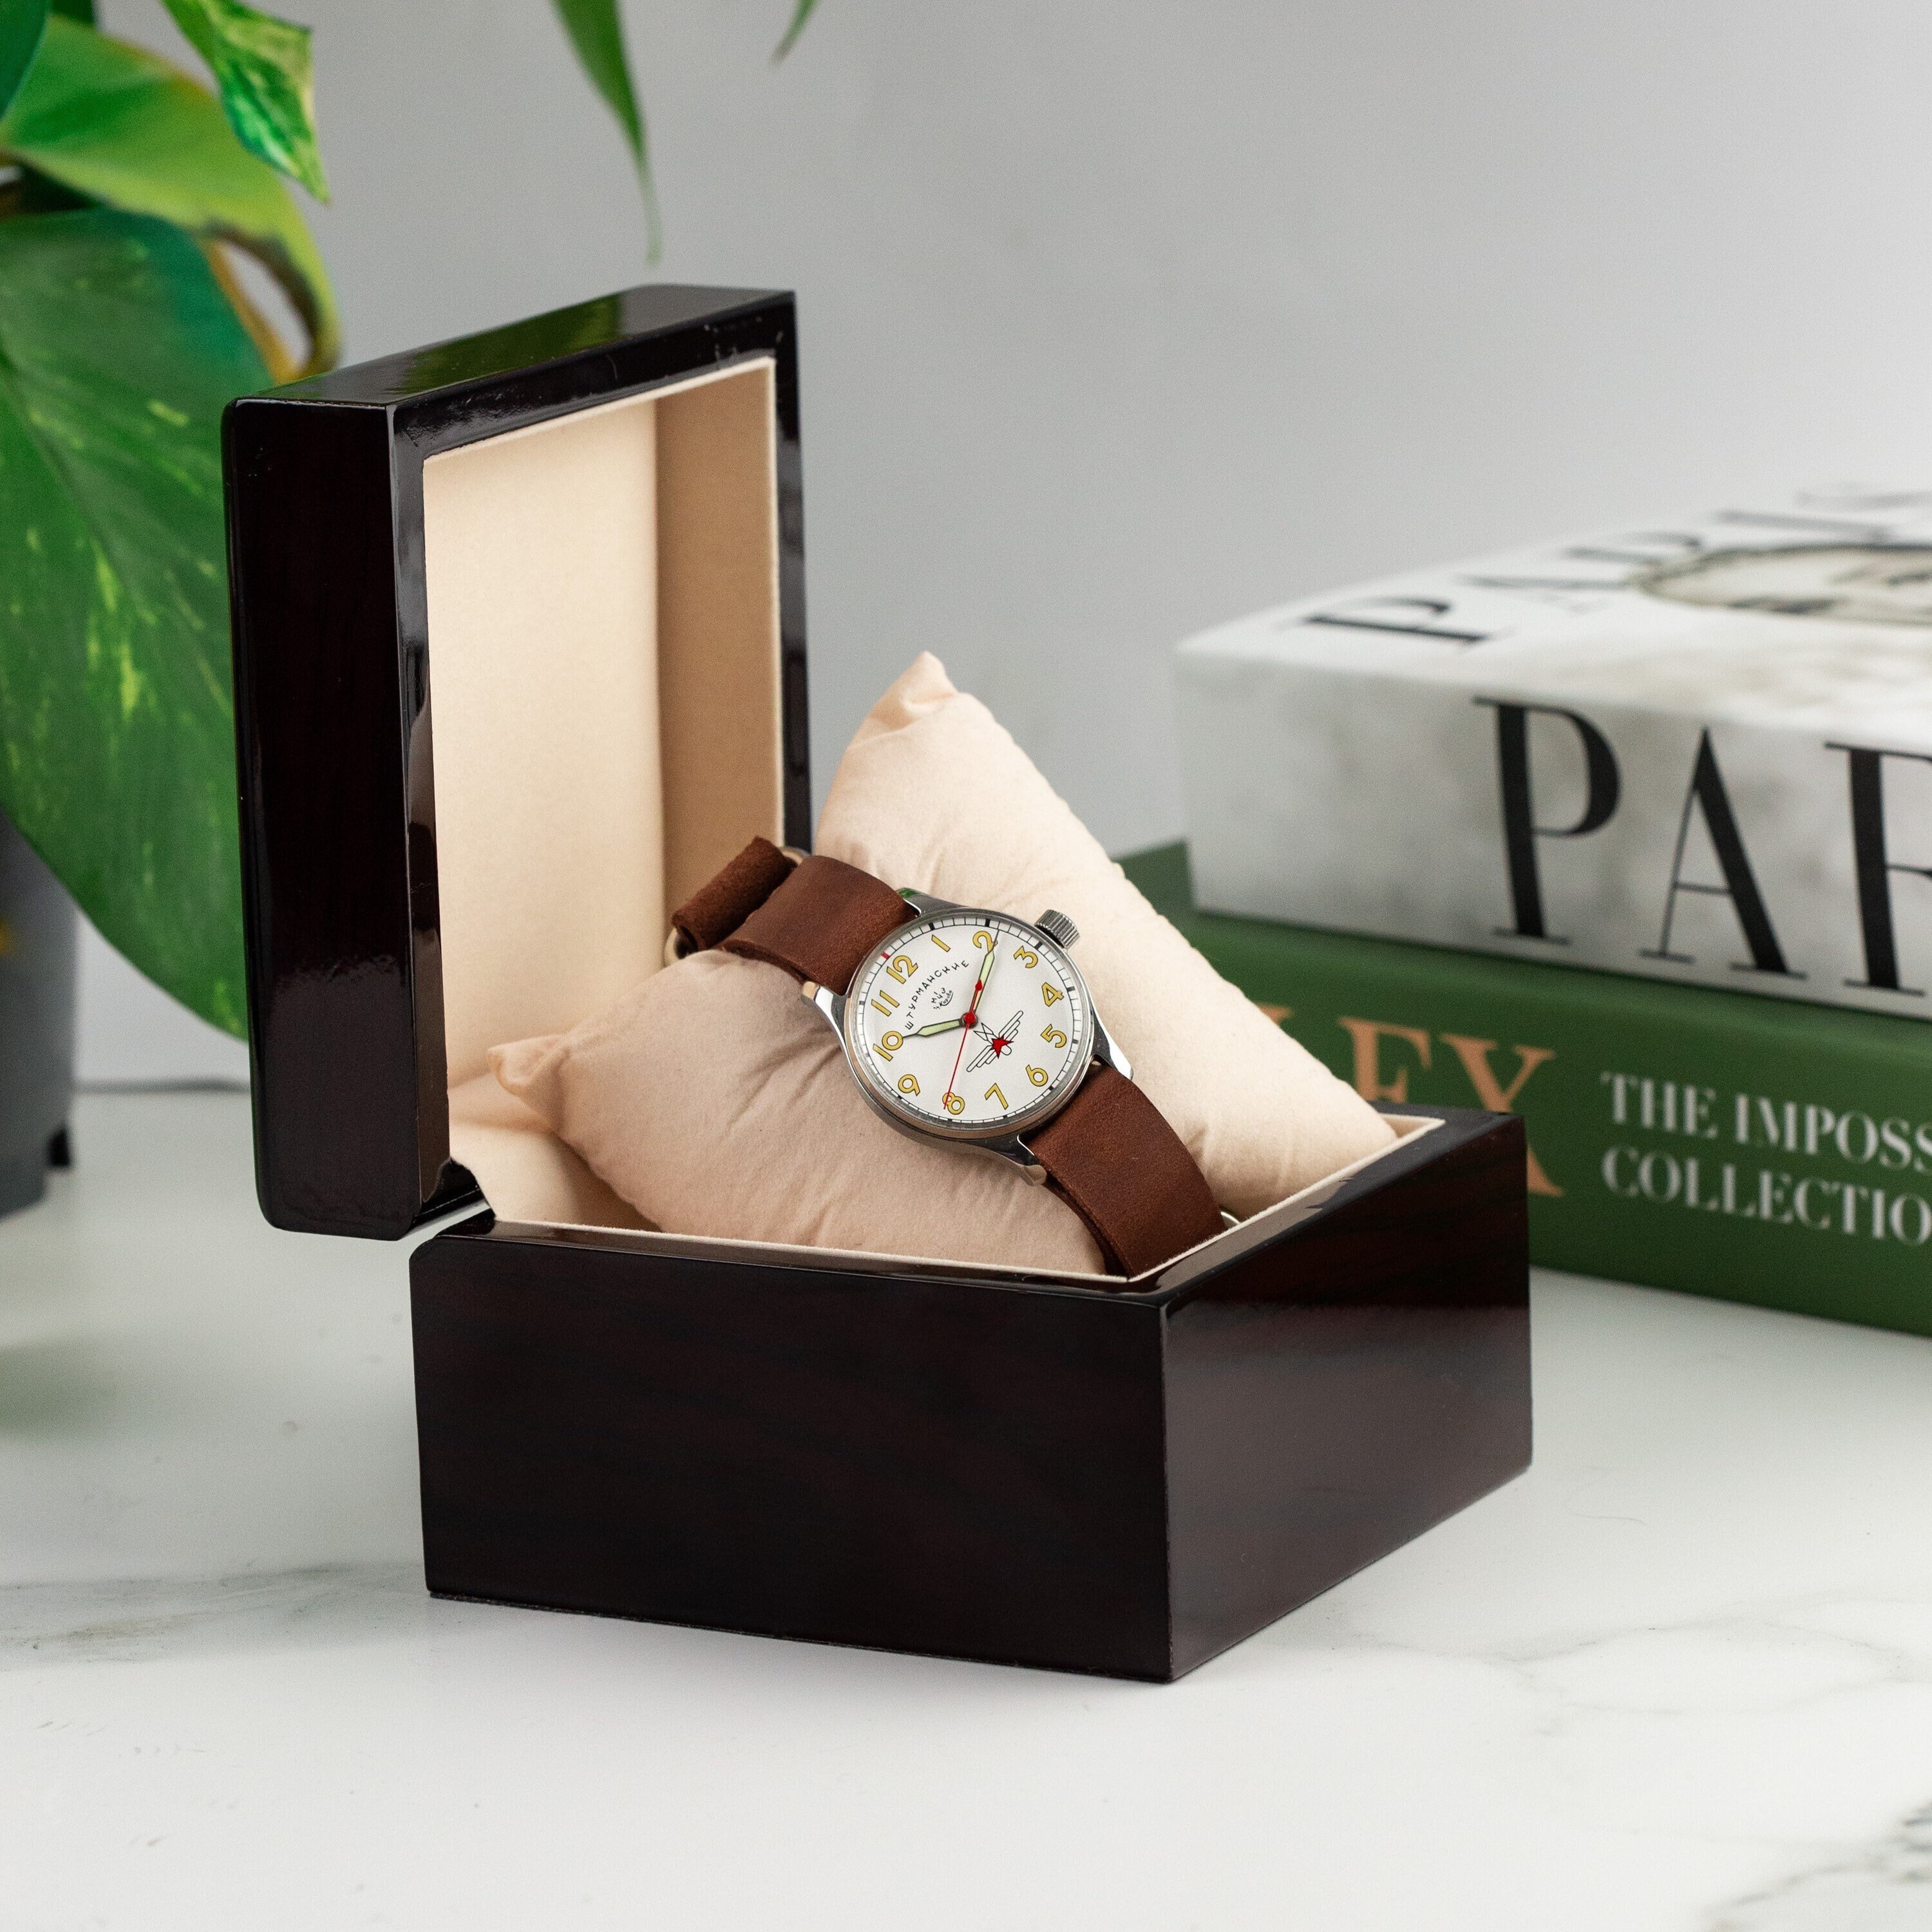 Hermes B02 Luxurious Precious Mahogany Wood Watch Box Impressive Model New!